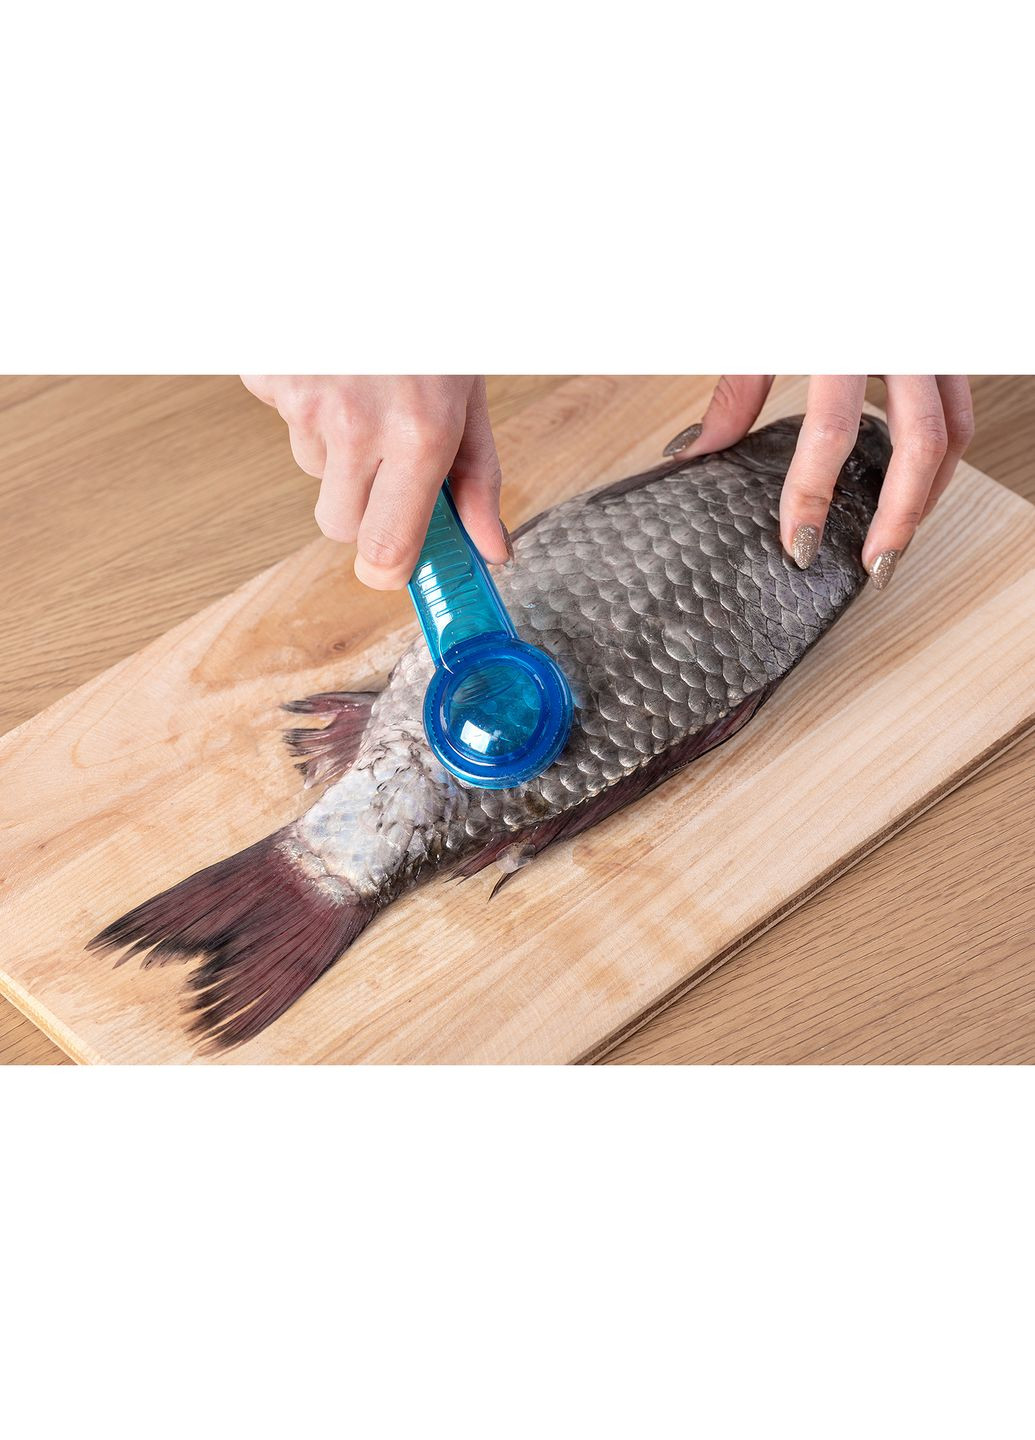 Рыбочистка пластмассовая 15 см Kitchette (260567608)